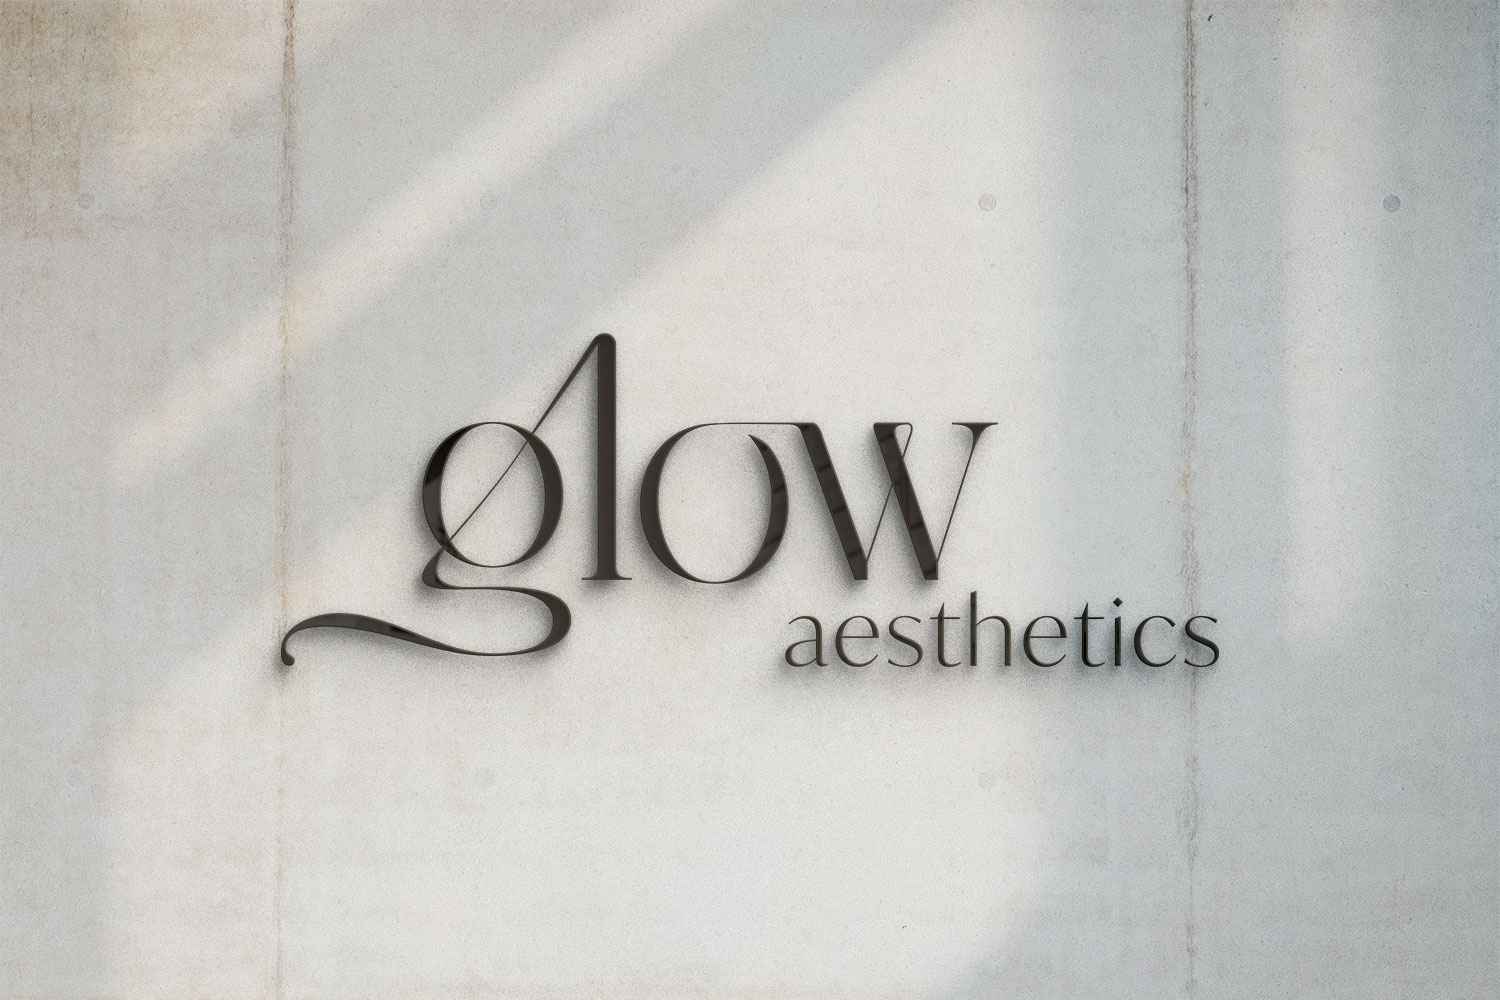 glow aesthetics logo design, Ashleigh May Design